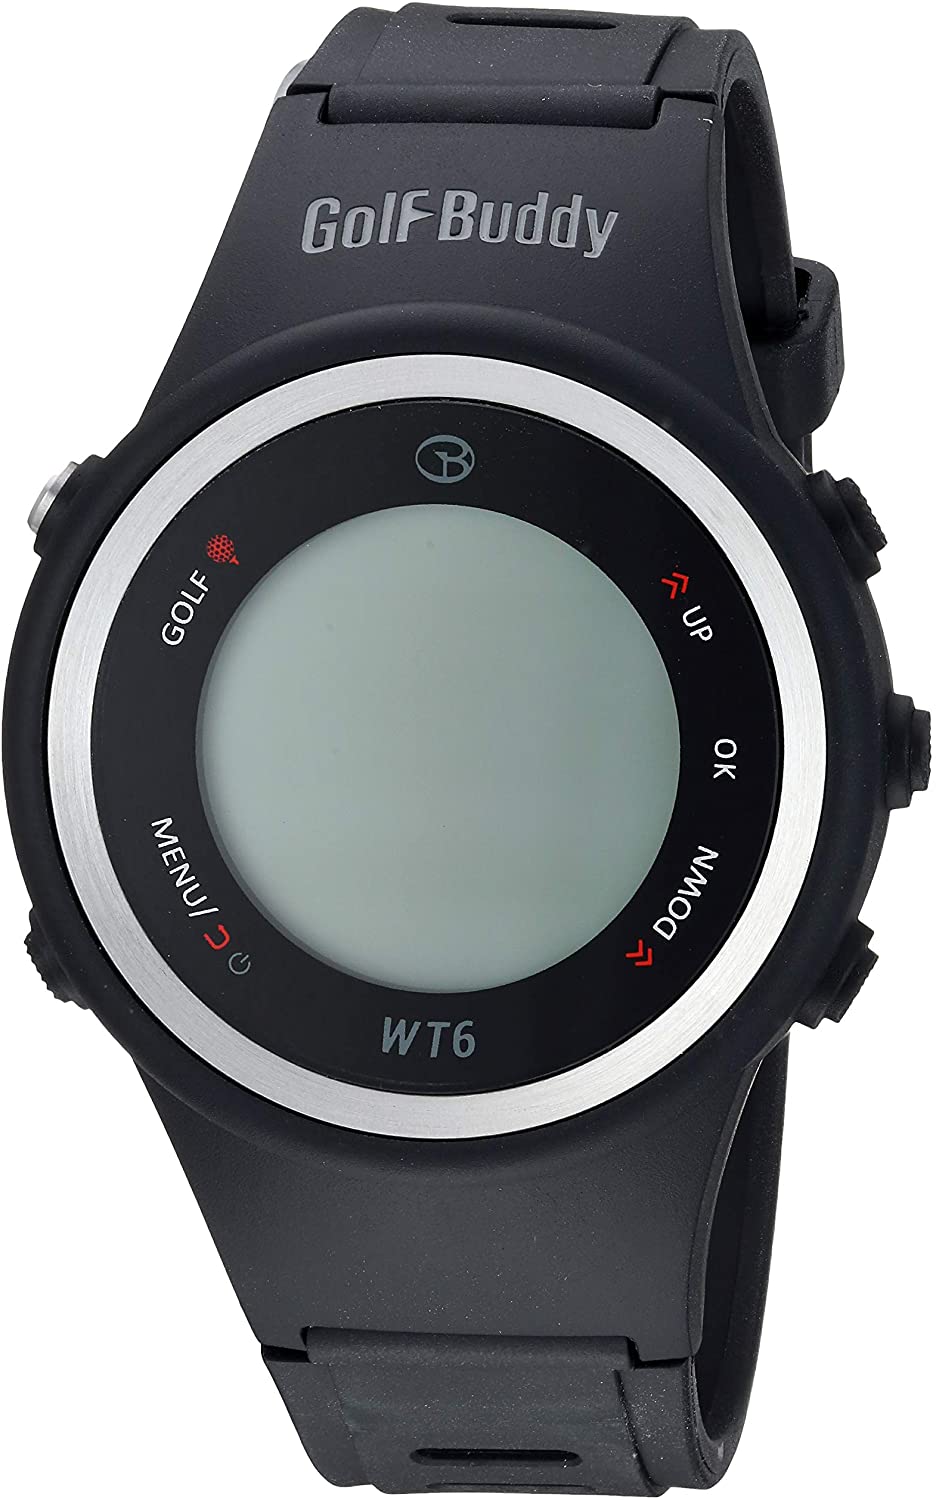 Mens Golf Buddy WT6 Golf GPS Watches